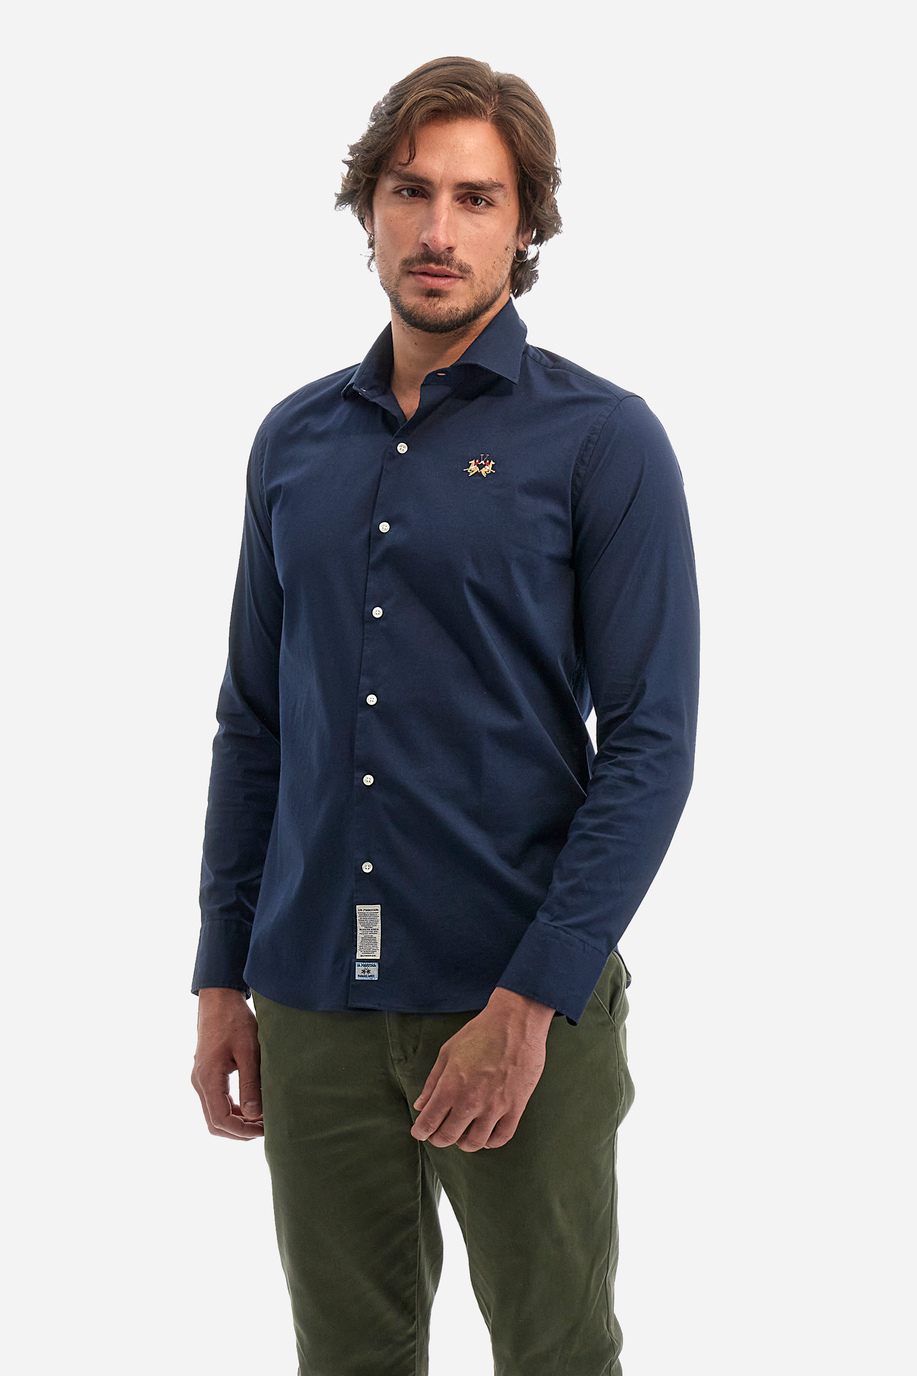 Men’s slim fit shirt small logo - Innocent - XLarge sizes | La Martina - Official Online Shop